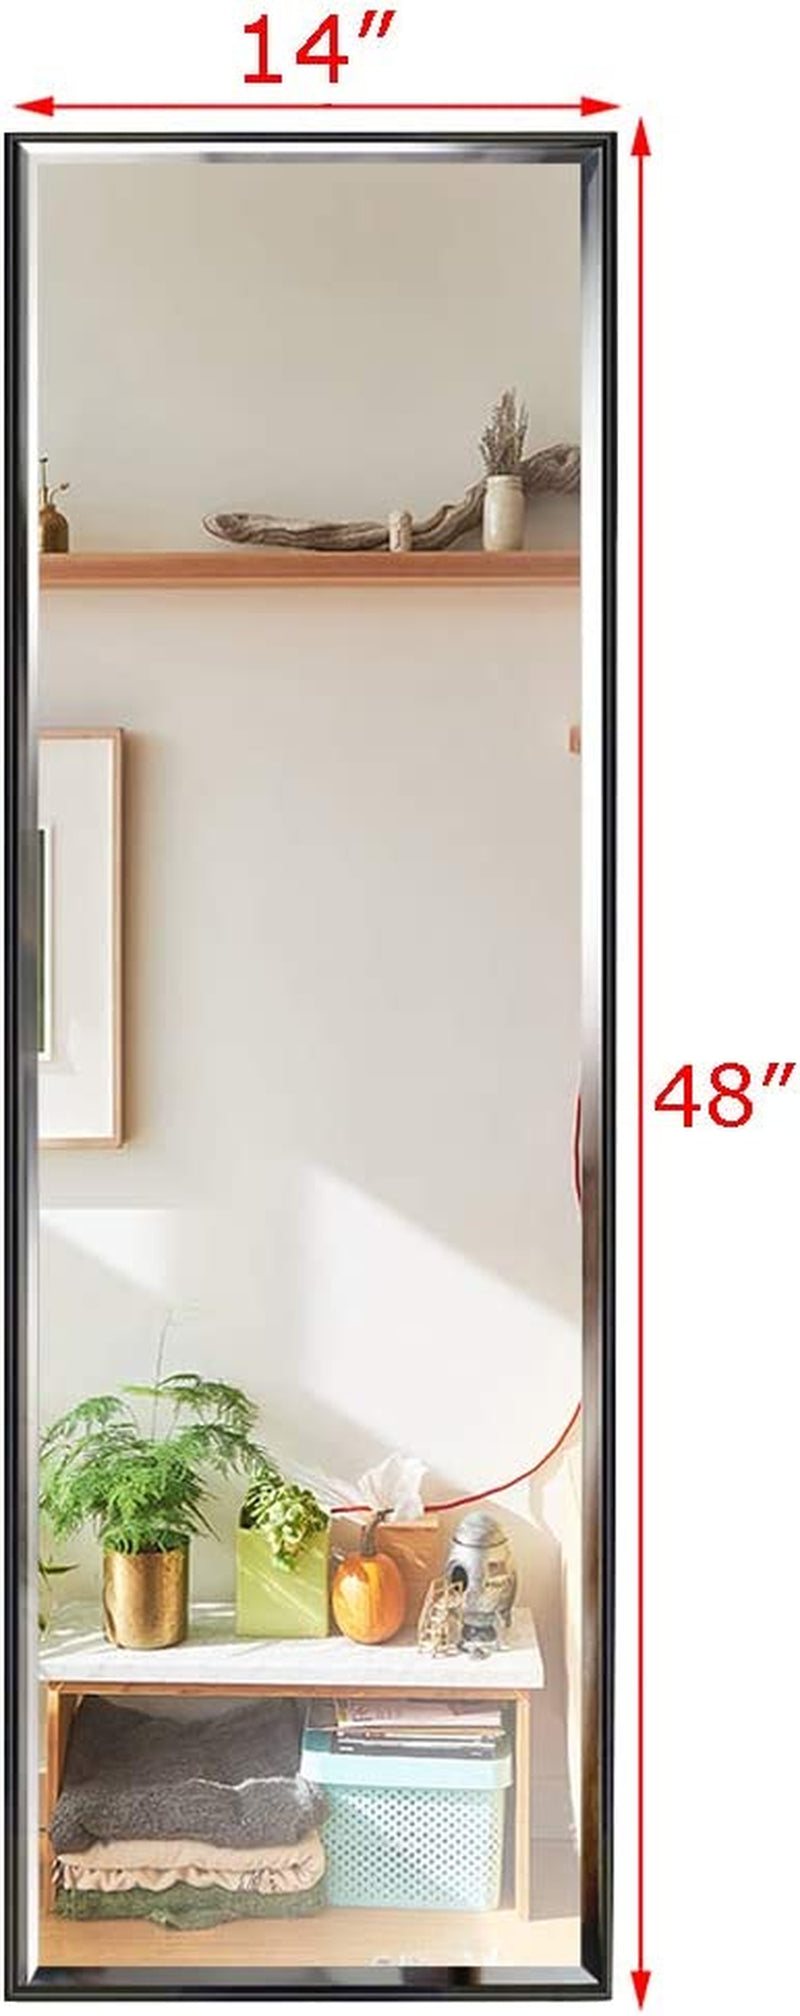 14X48 Inch Full Length Mirror Wall Mounted - Black